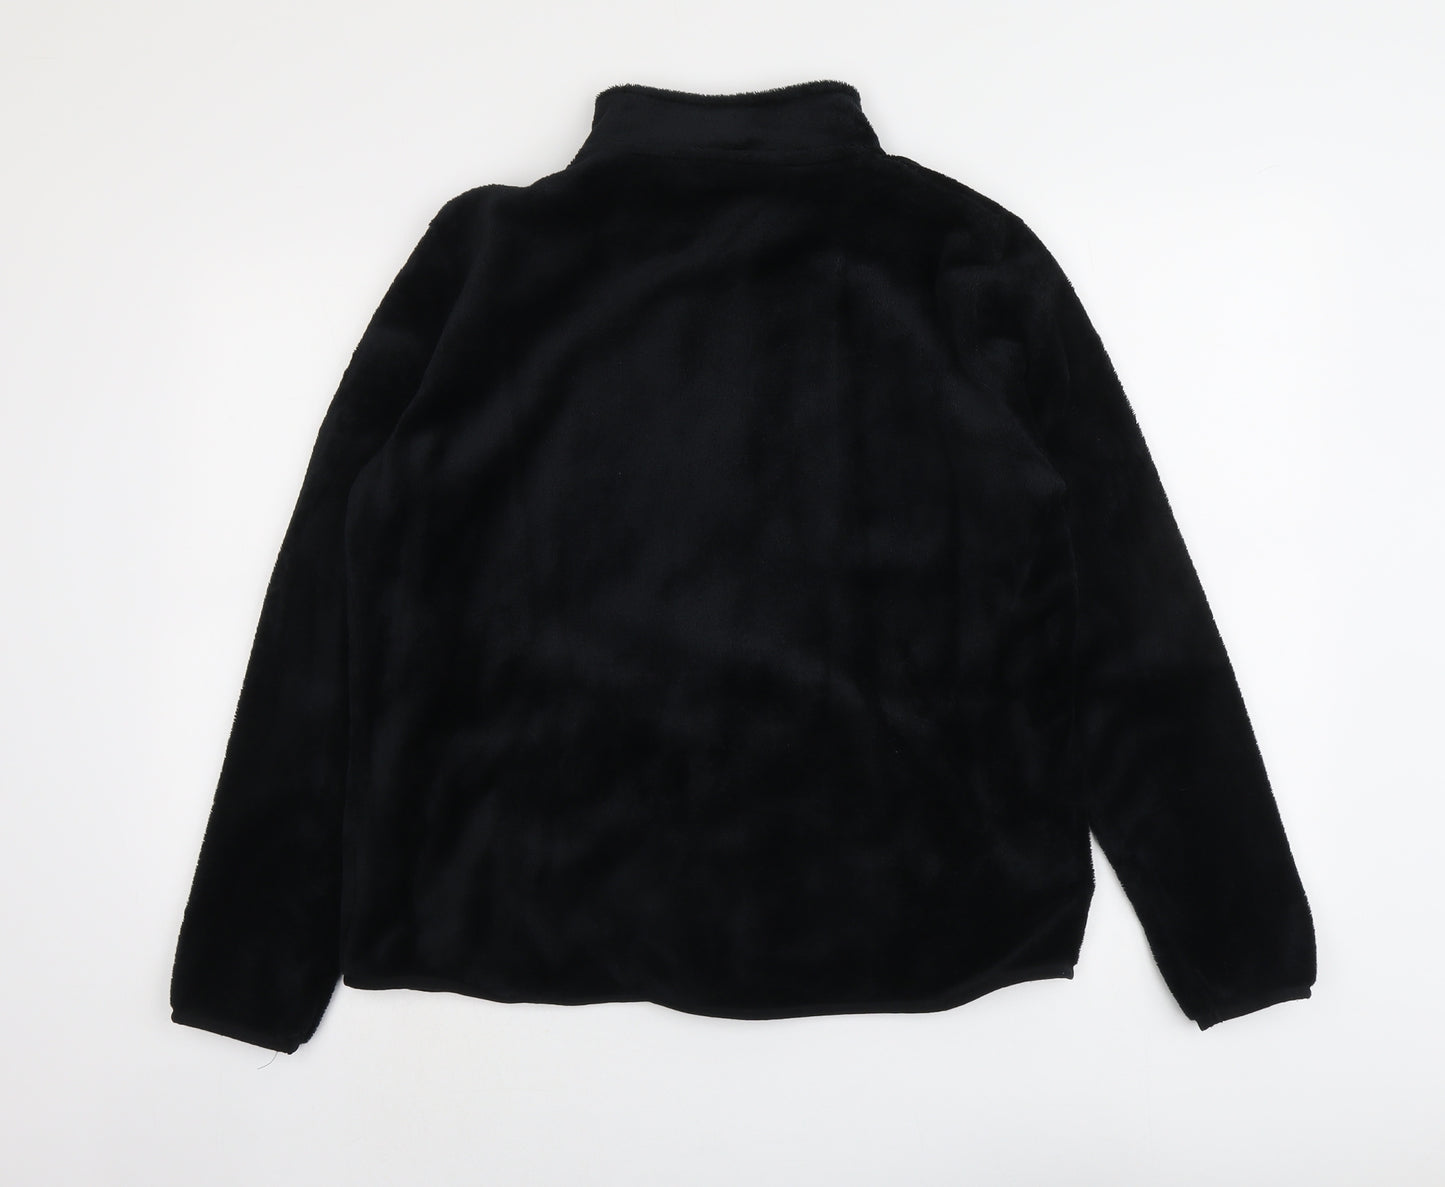 Avenue Womens Black Jacket Size L Zip